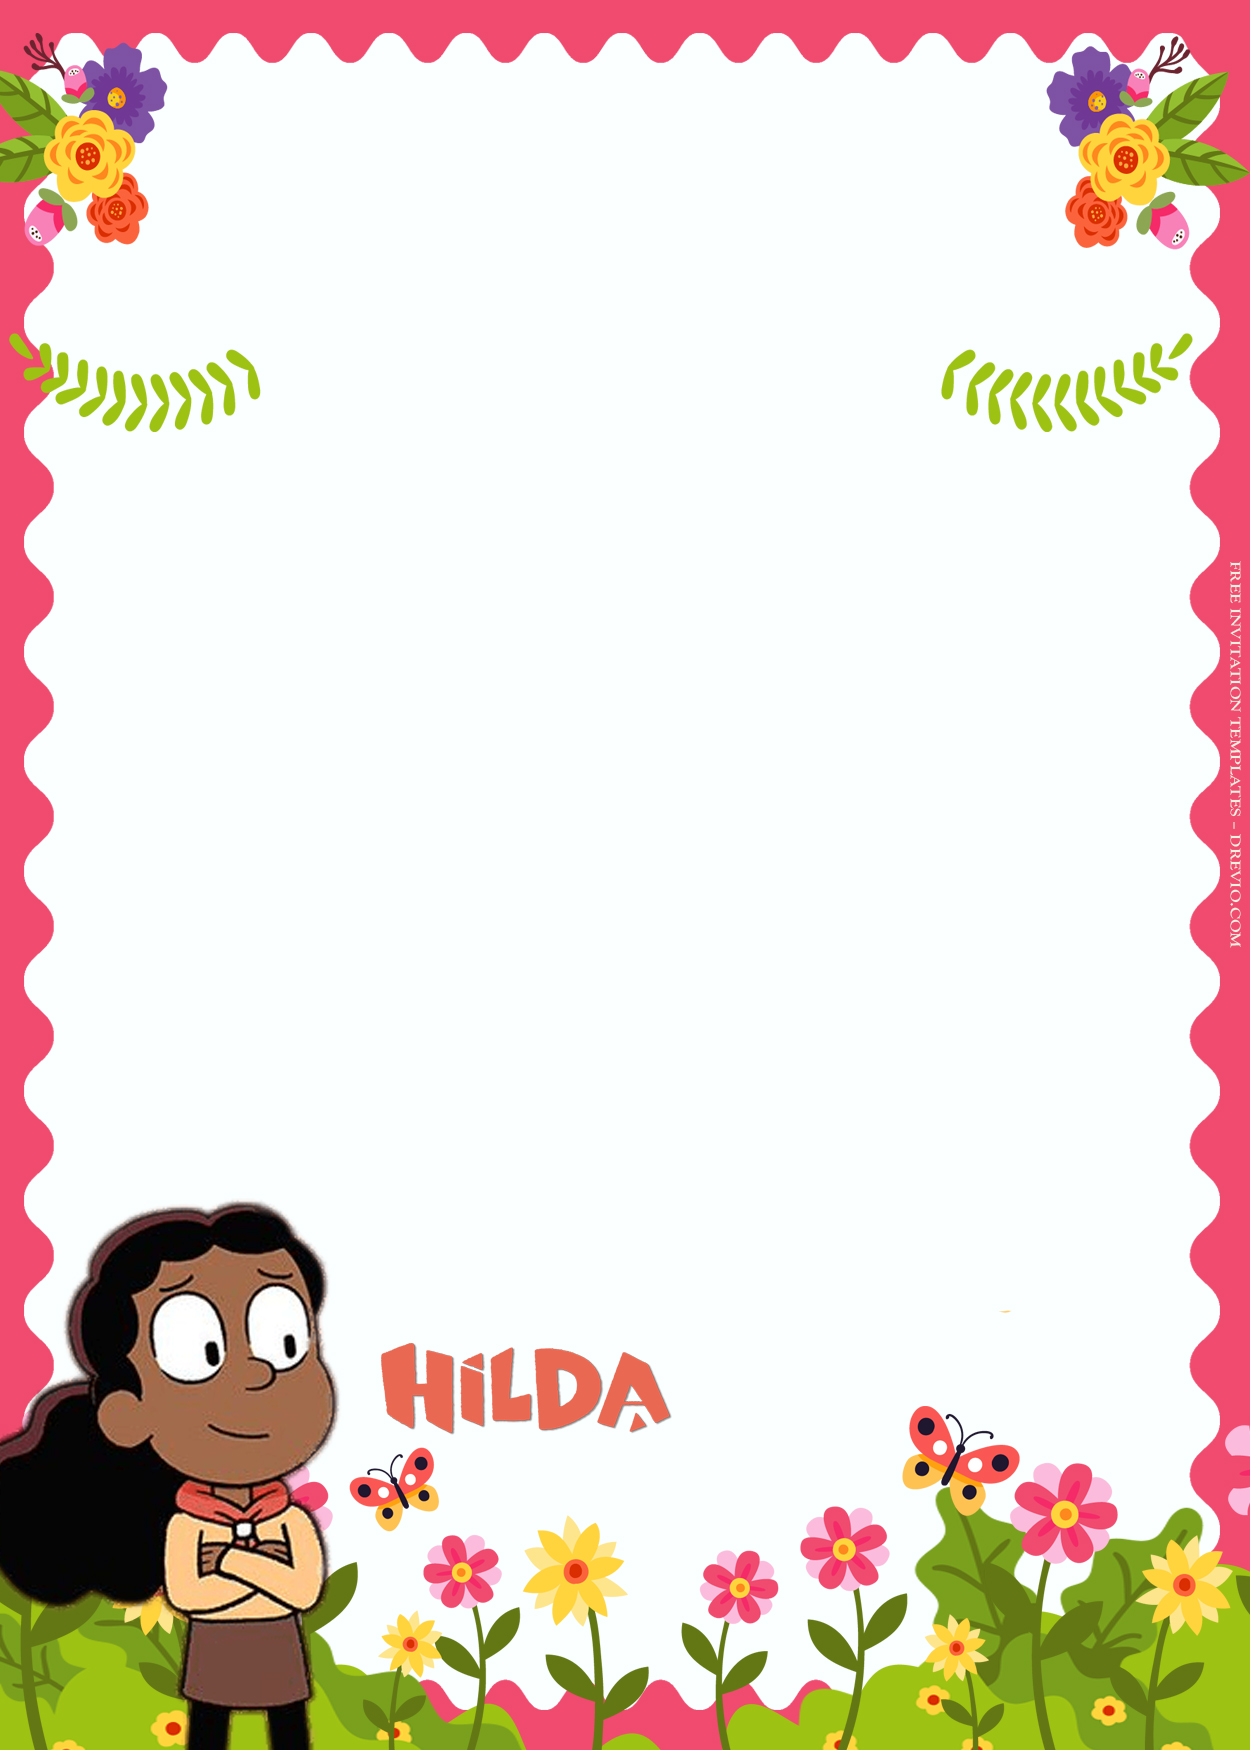 11+ Hilda And Friends Birthday Invitation Templates Four